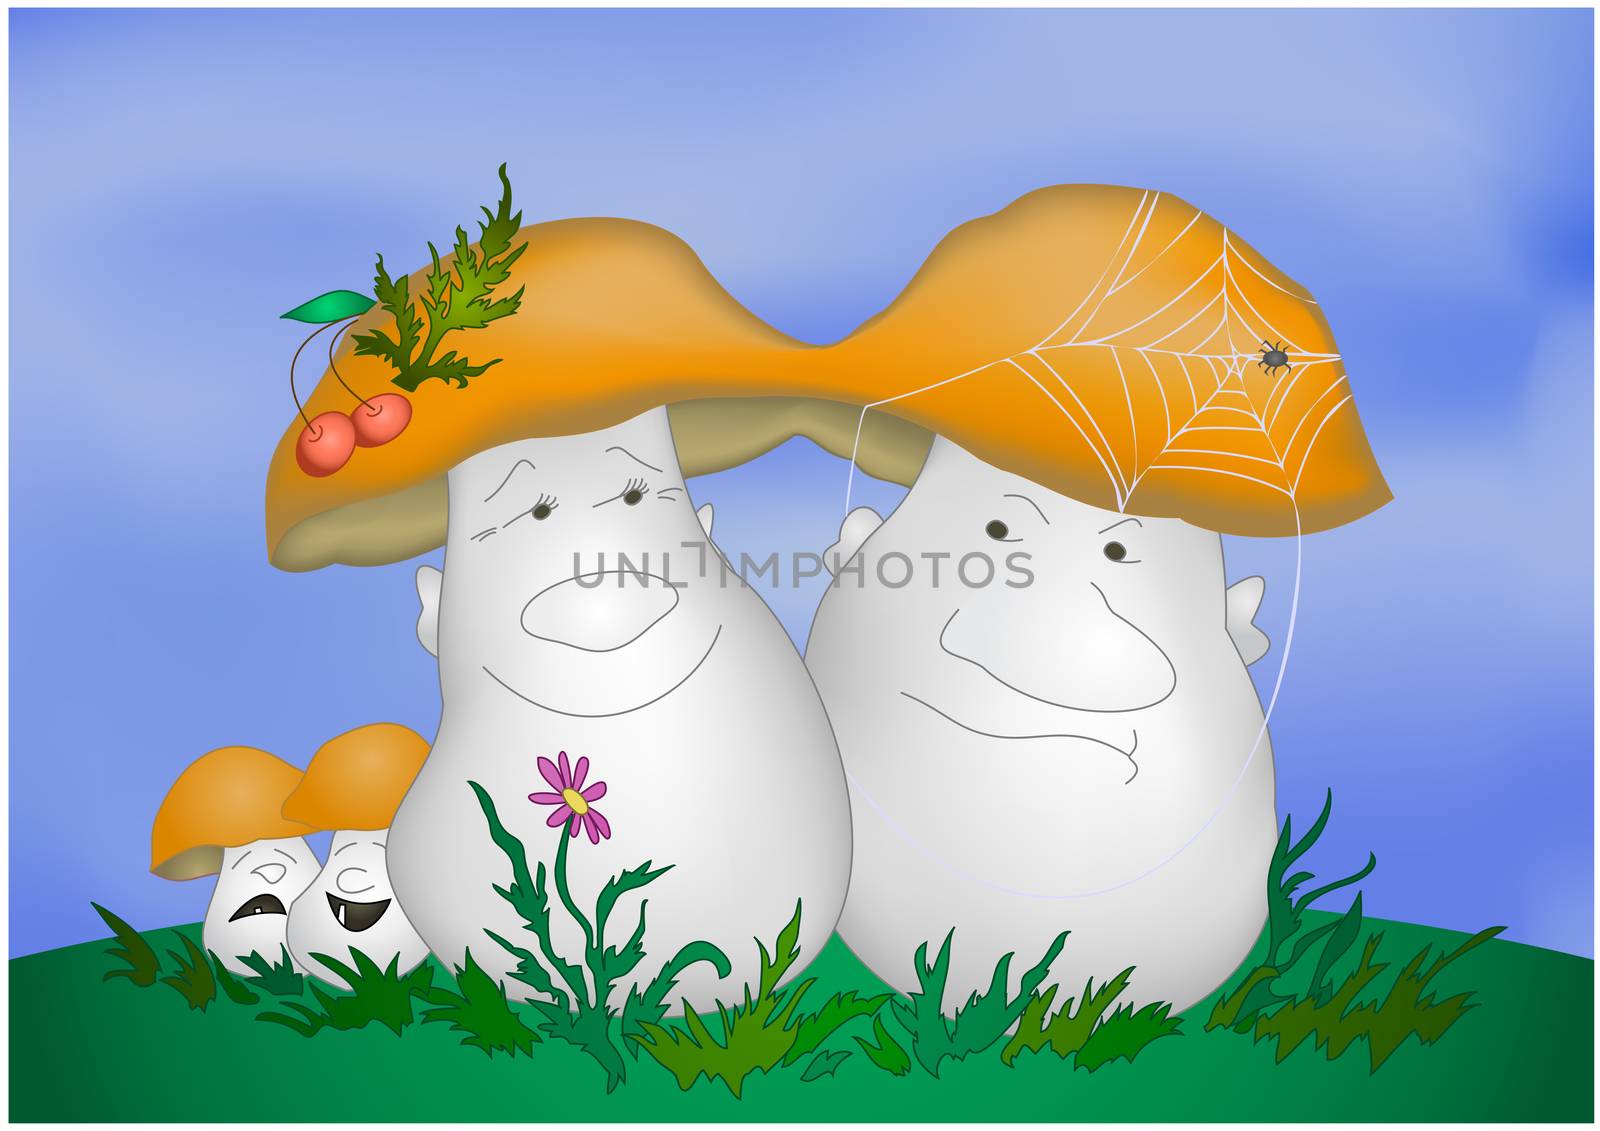 Family of cartoon mushrooms ceps on a flower meadow.